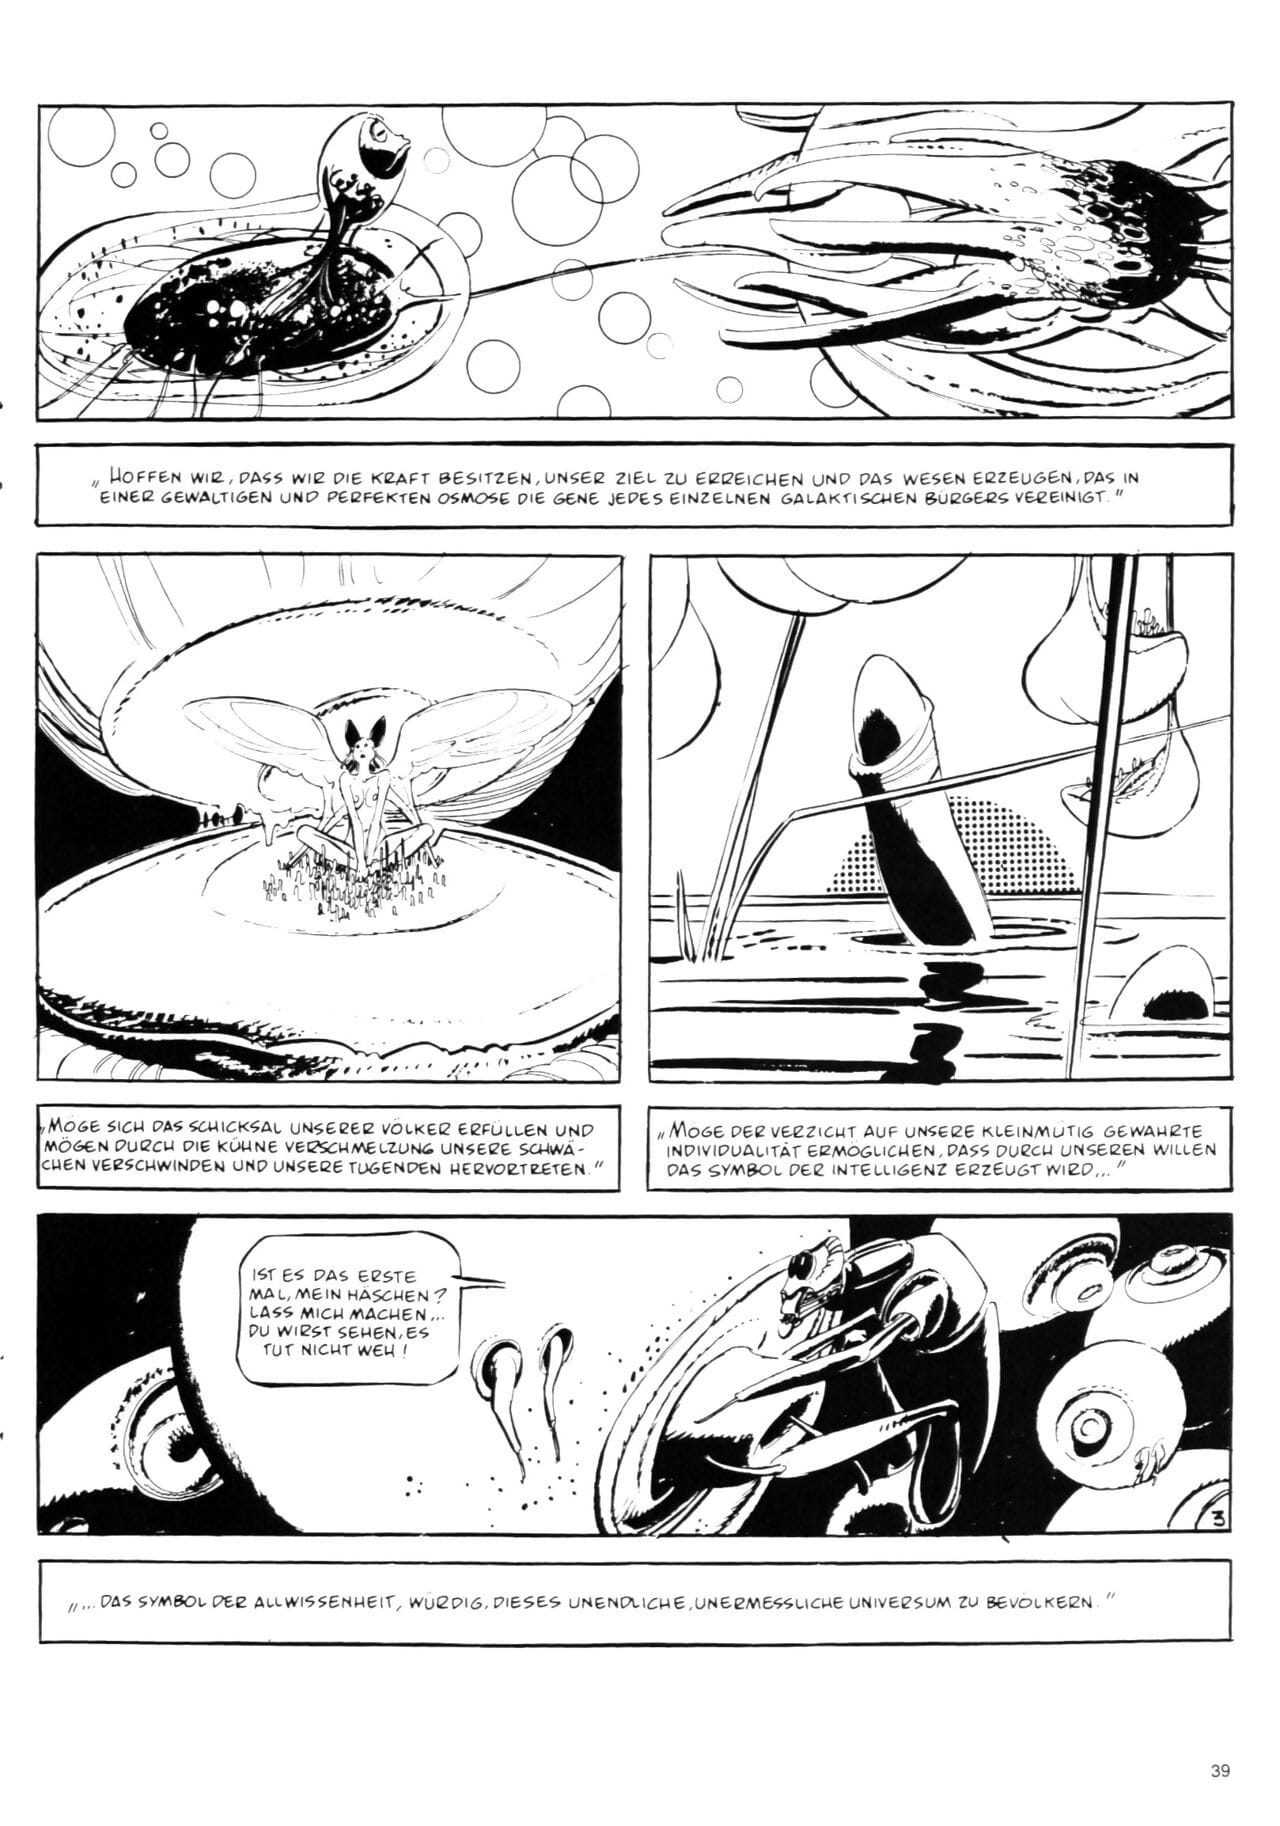 Schwermetall #070 - part 2 page 1